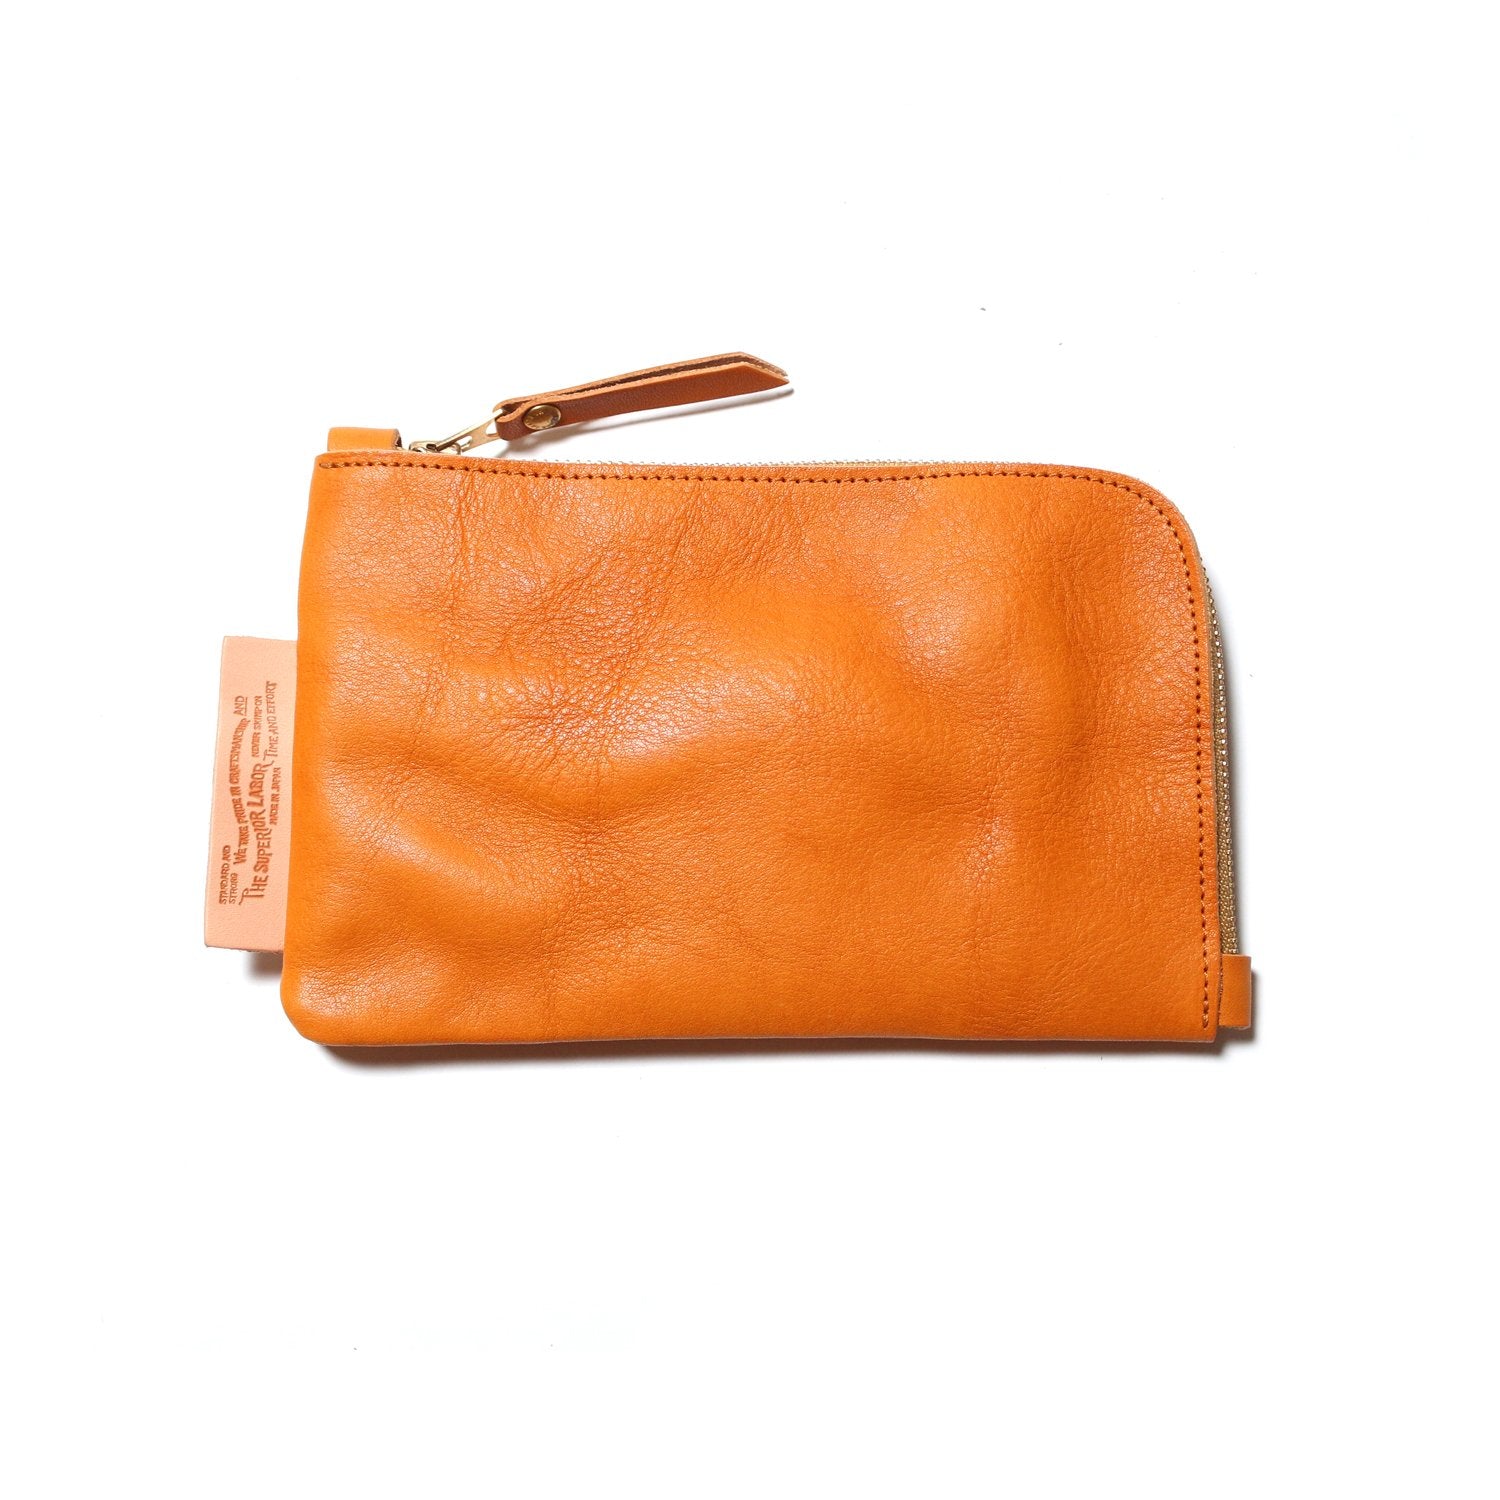 BG0021 utility leather pouch